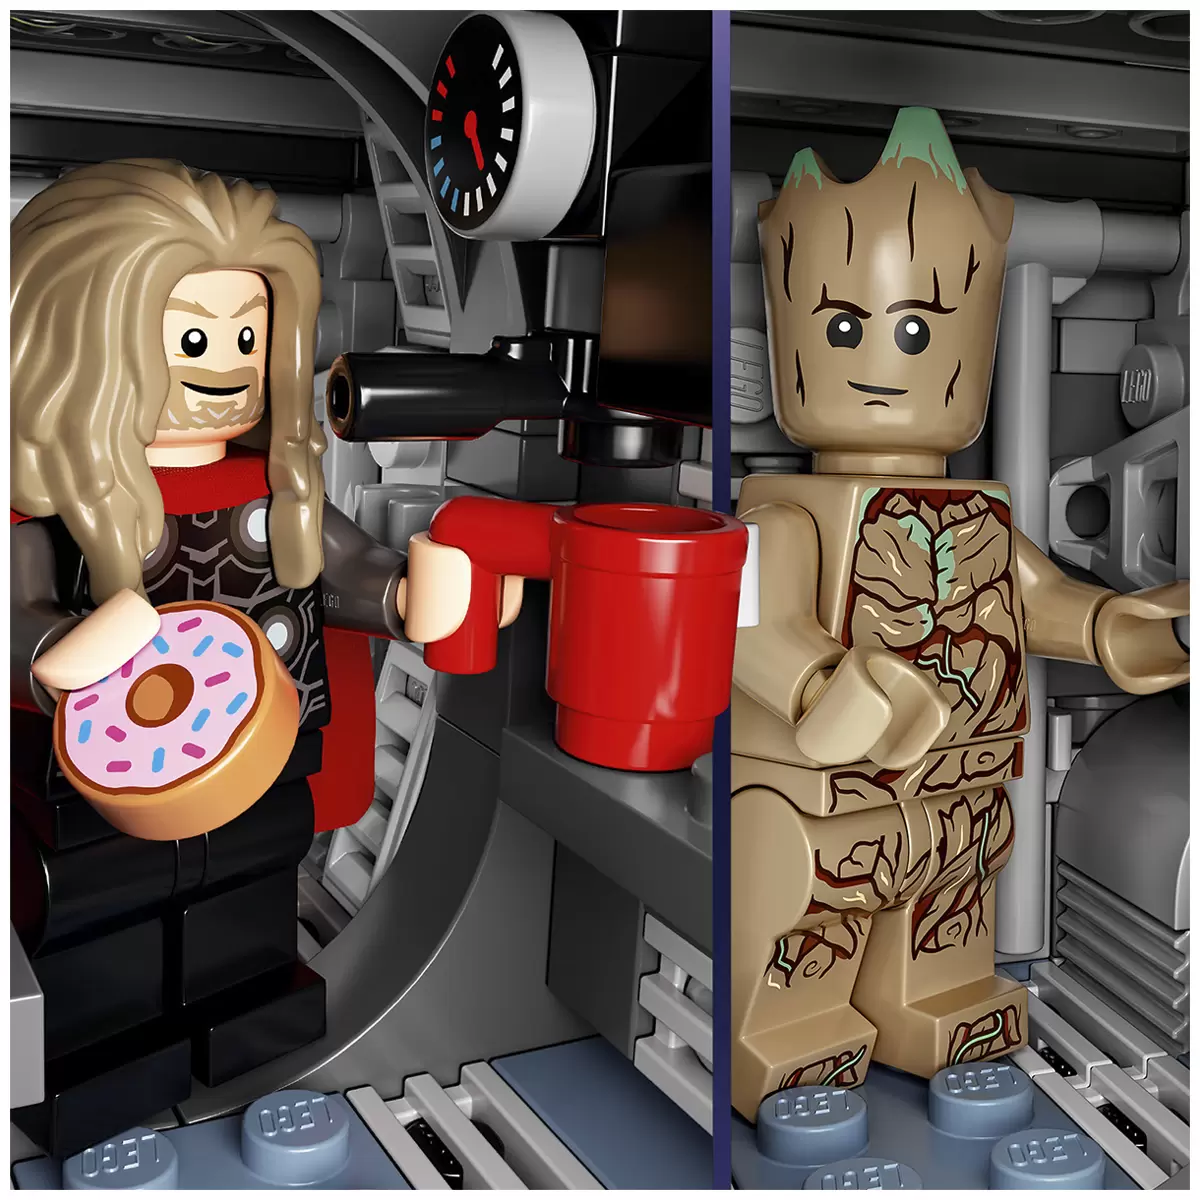 LEGO The Infinity Saga The Guardians’ Ship 76193